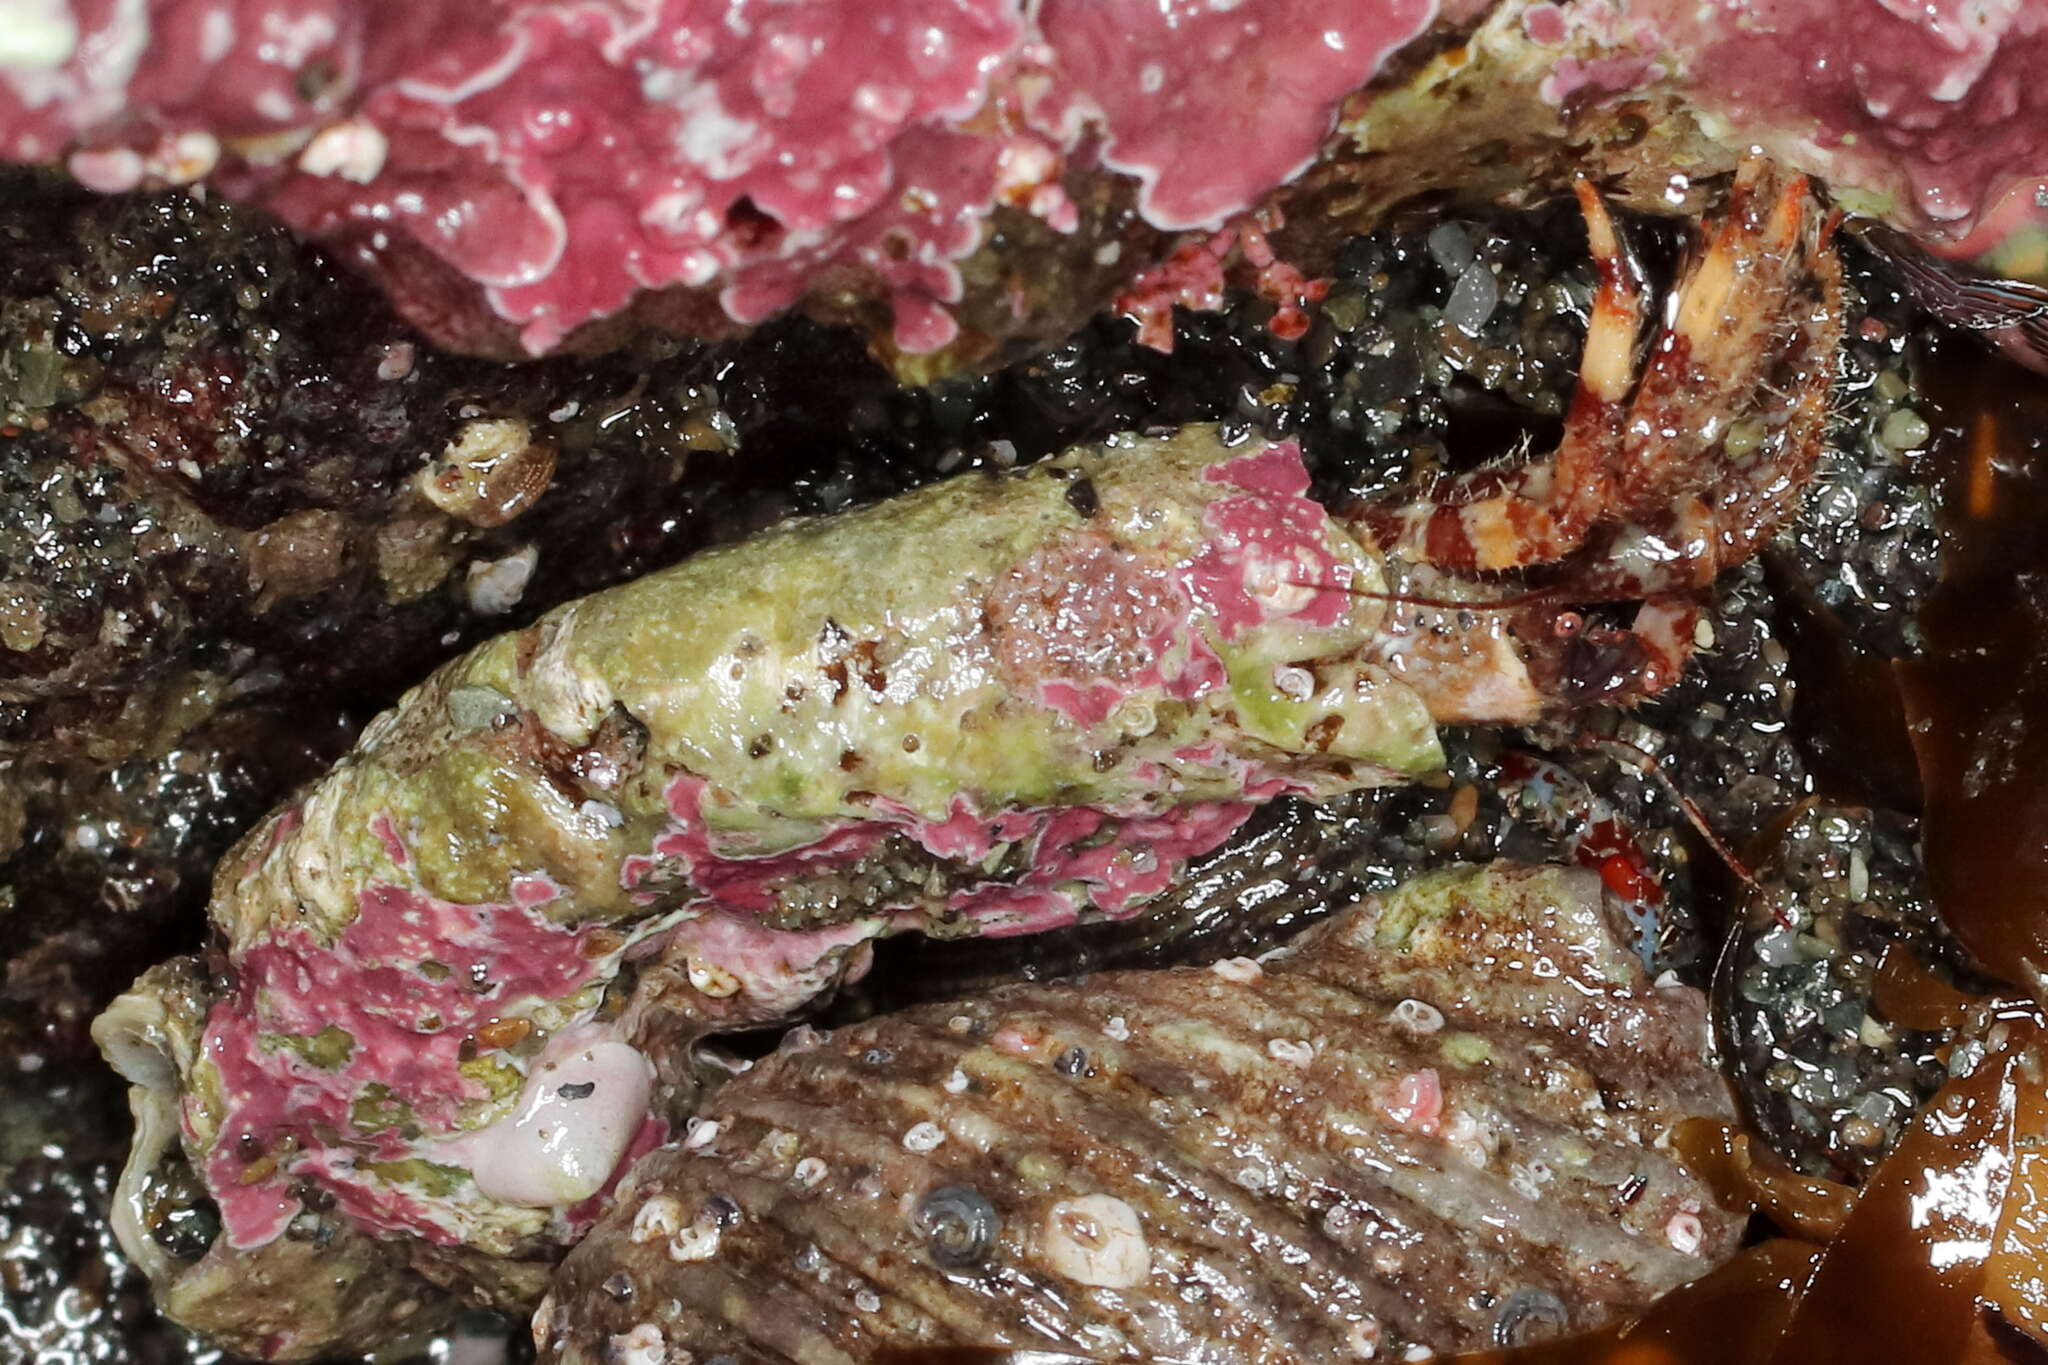 Image of tubeworm hermit crab